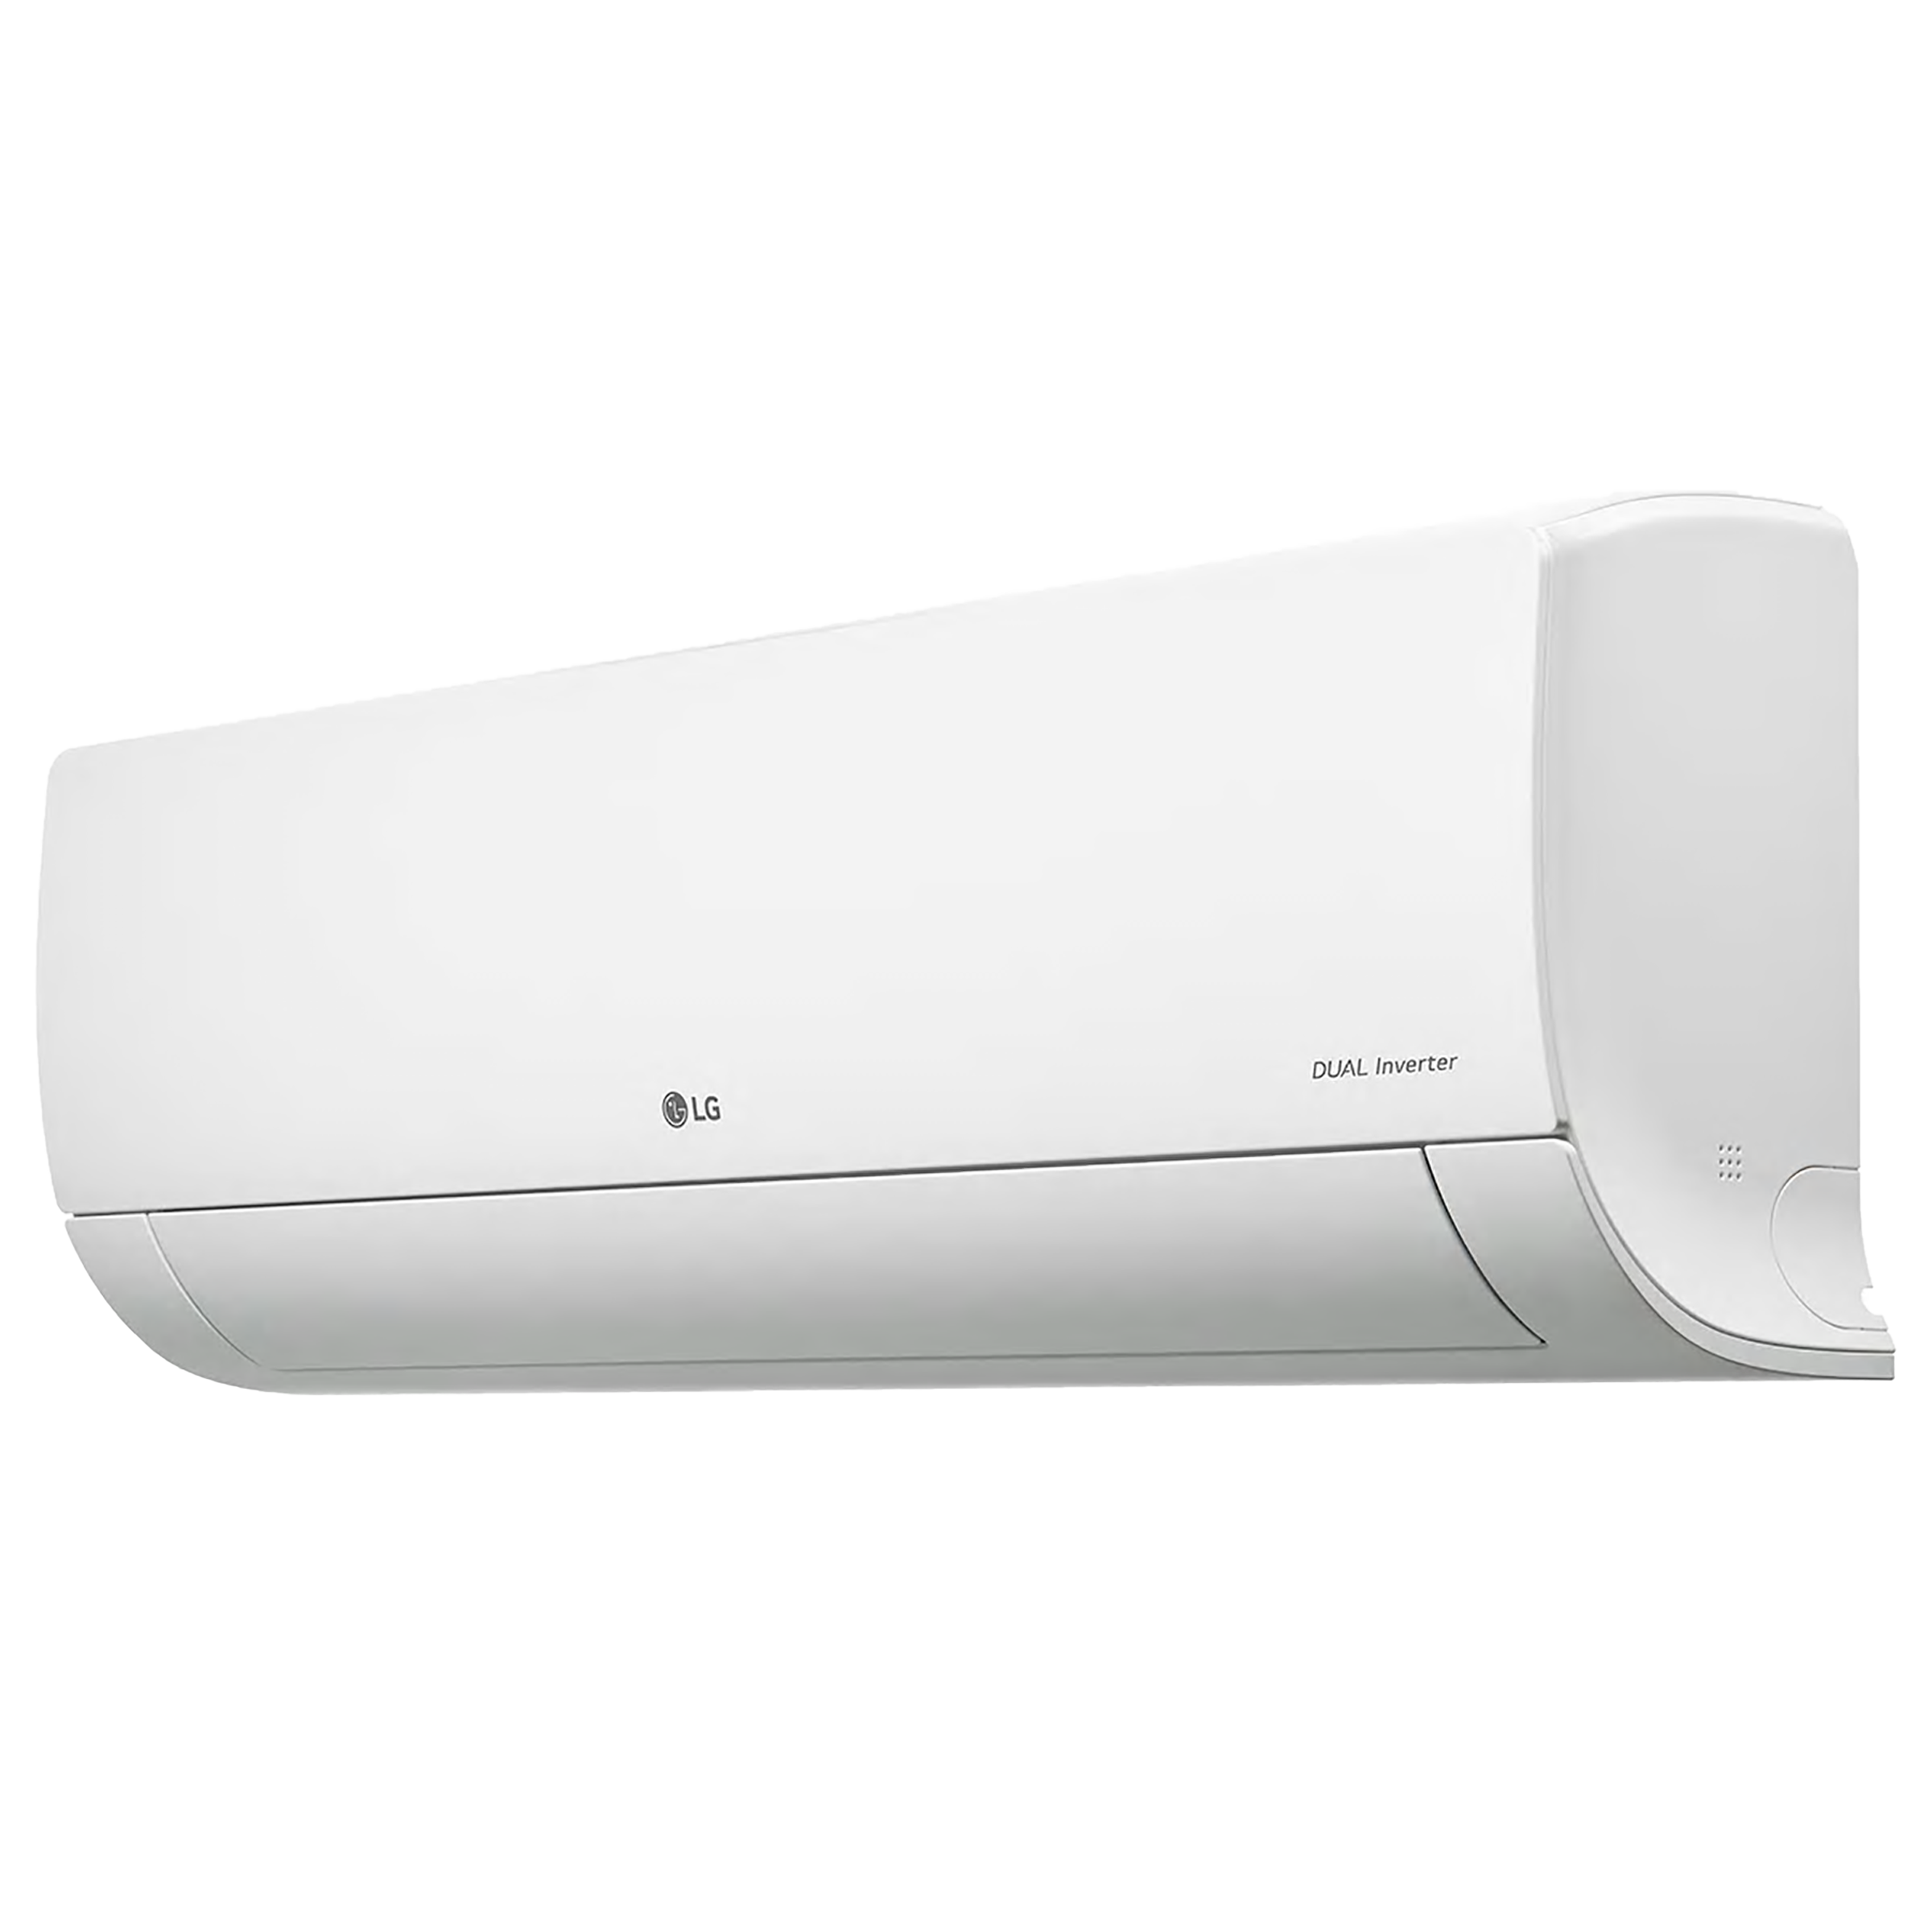 LG 1 Ton 5 Star Inverter Split AC (Air Purification Filter, Copper Condenser, MS-Q12ANZA, White)_4